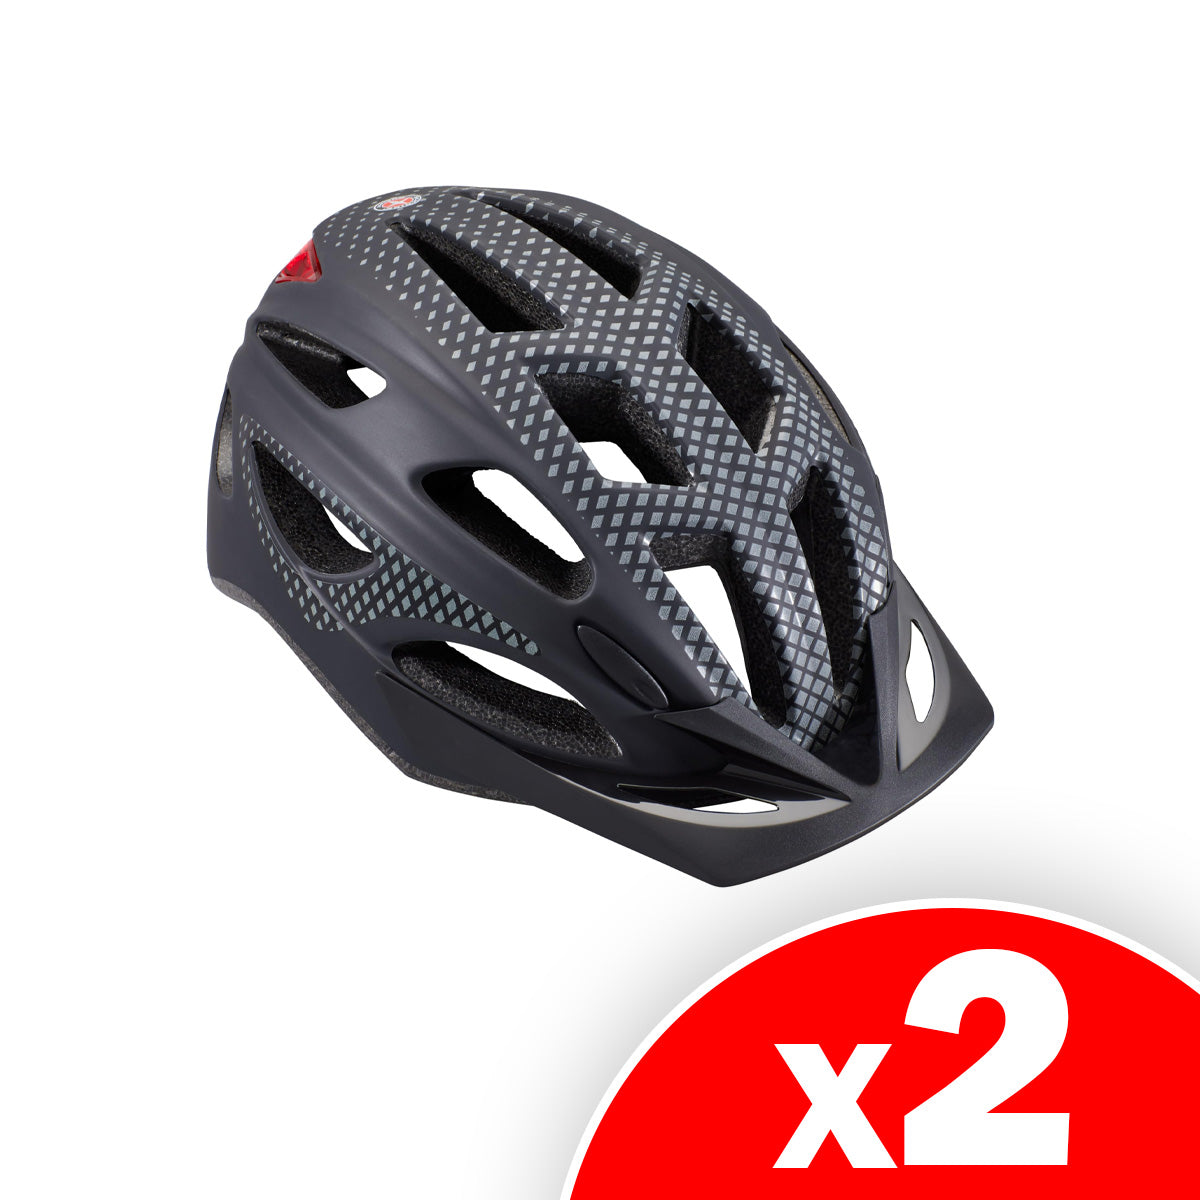 Schwinn Beam LED Lighted Bike Helmet with Reflective Design for Adults, 2 Pack